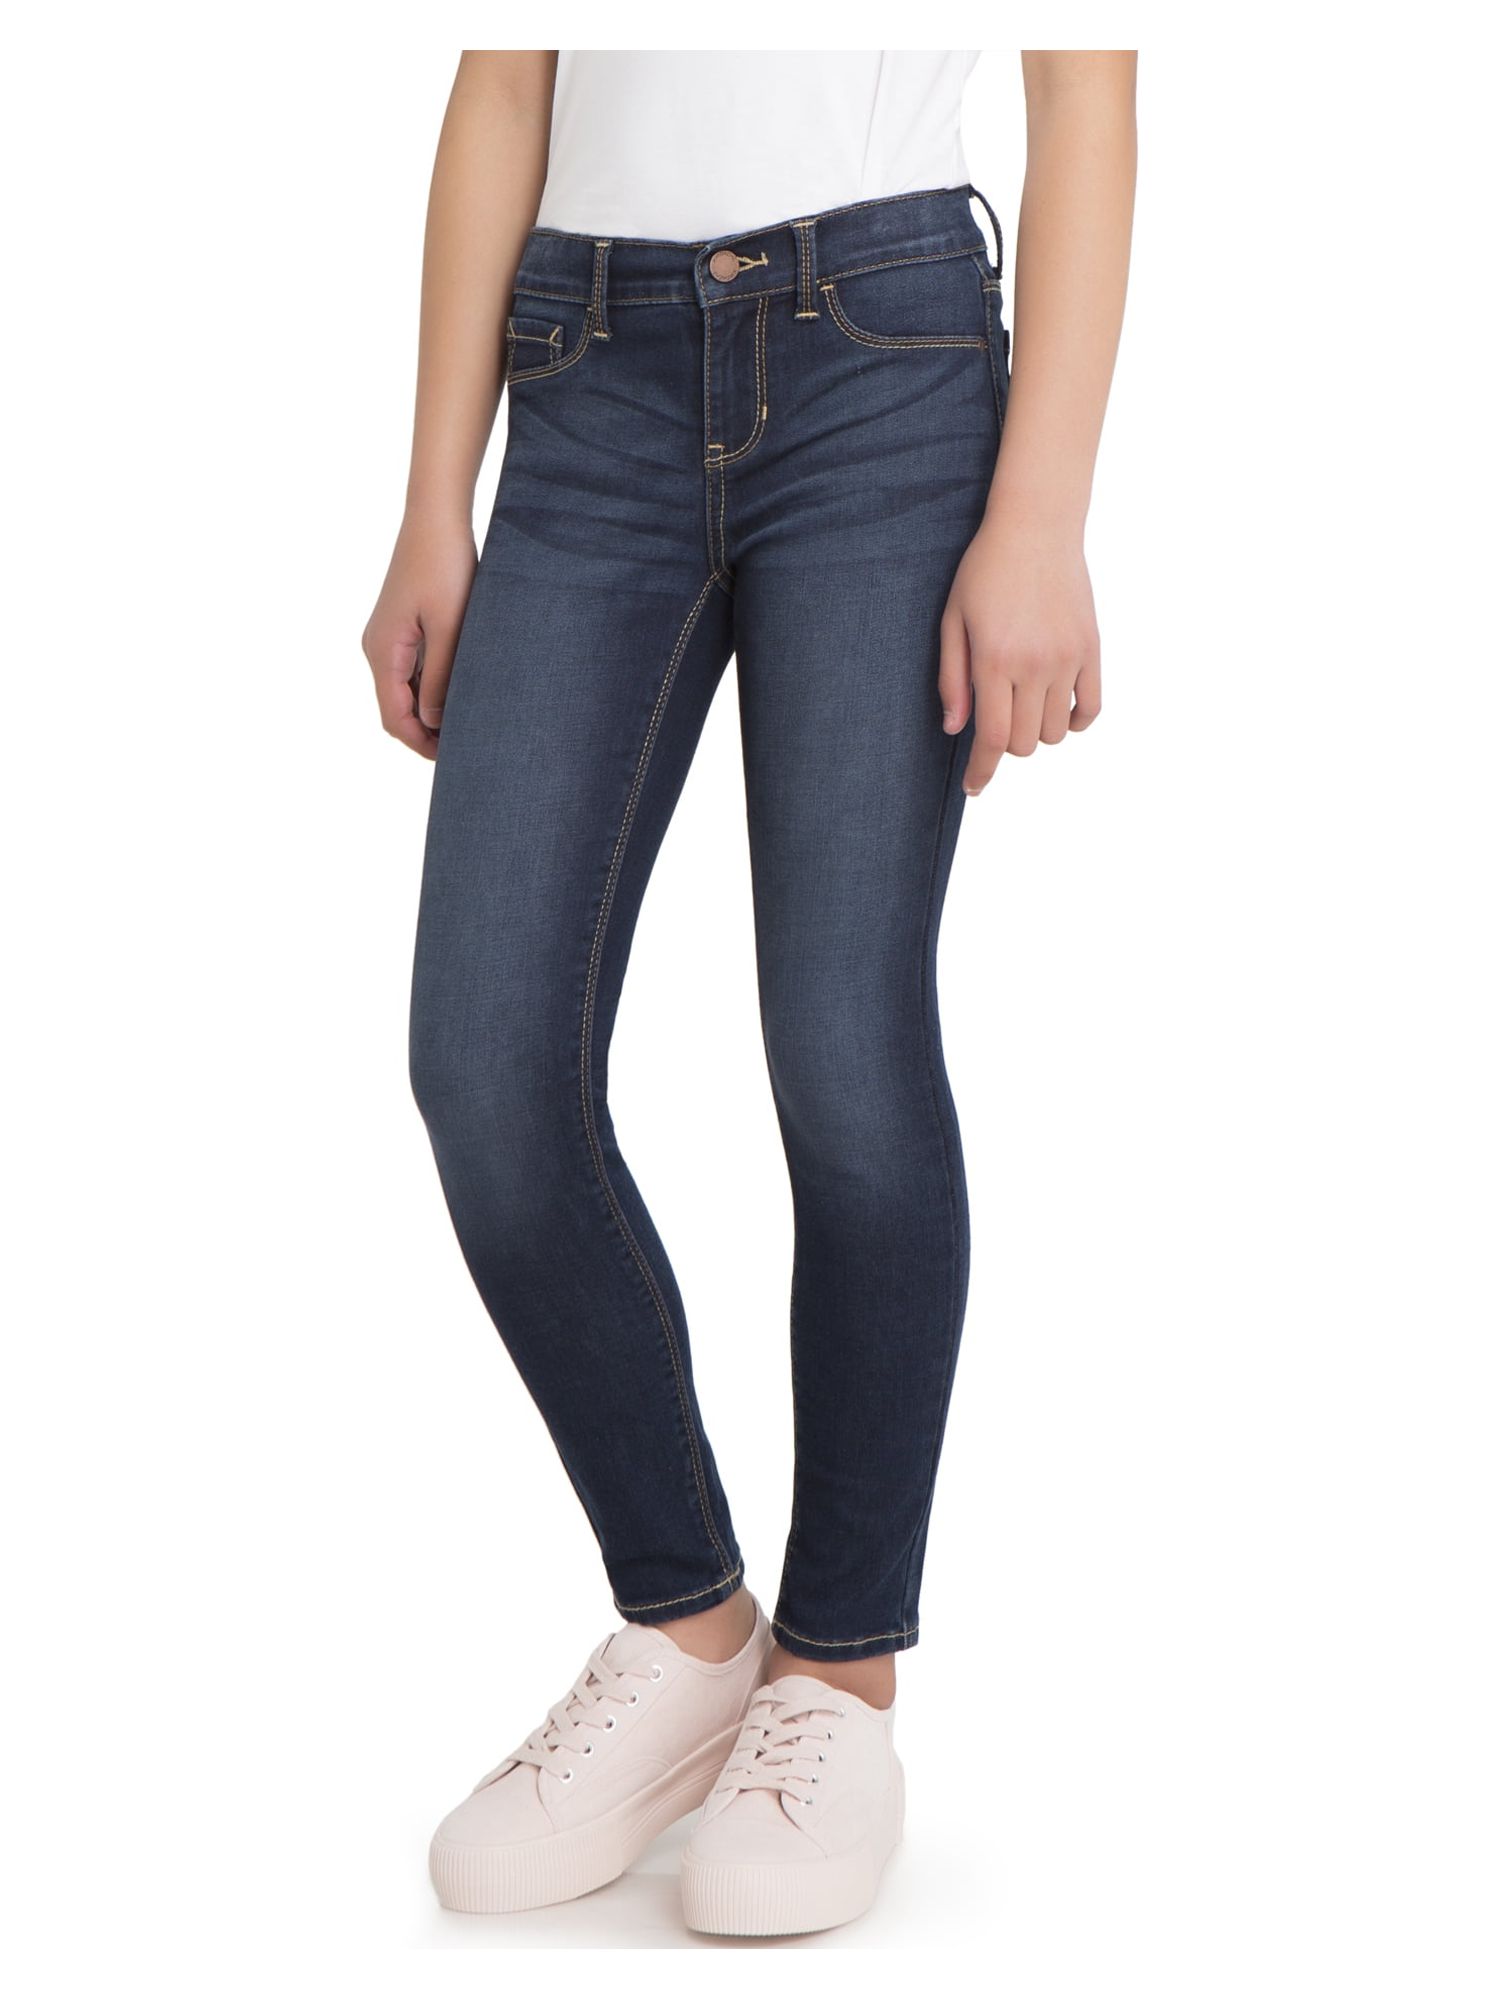 Jordache Girls Super Skinny Power Stretch Jeans, Sizes 5-18 - image 1 of 3